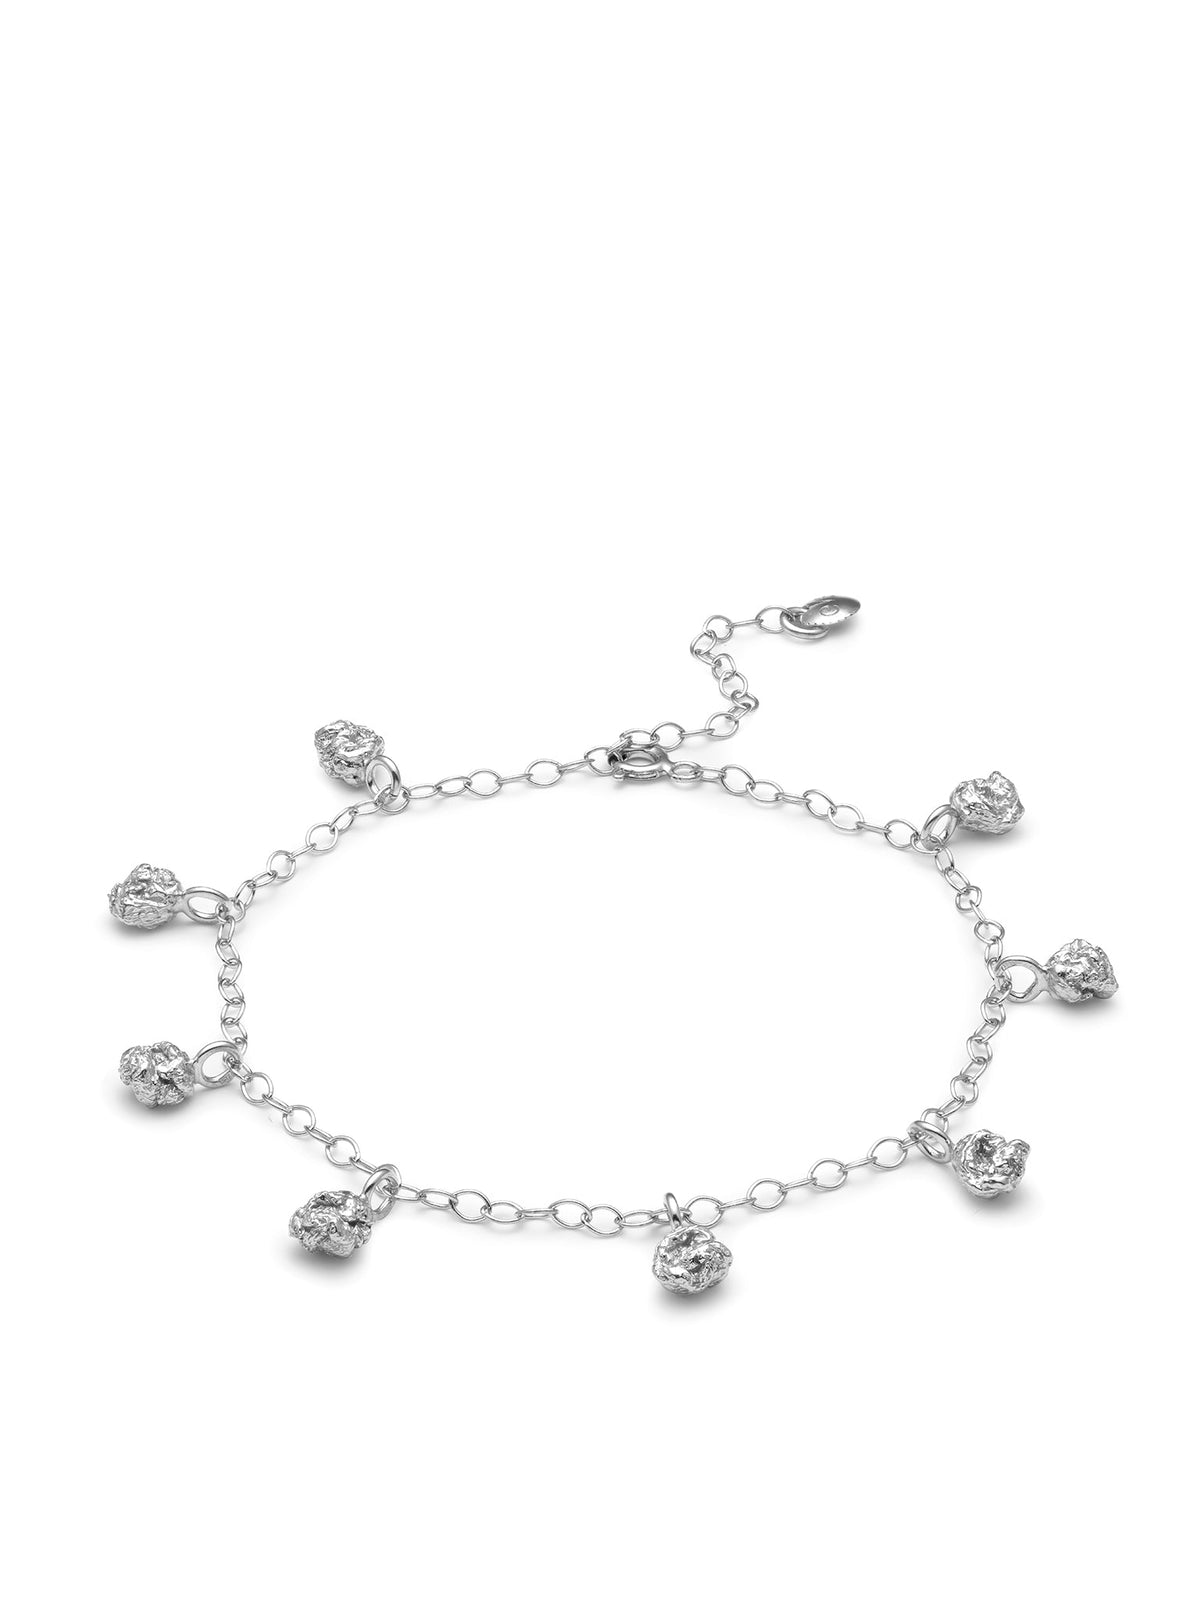 Archaic Chain Bracelet Silver